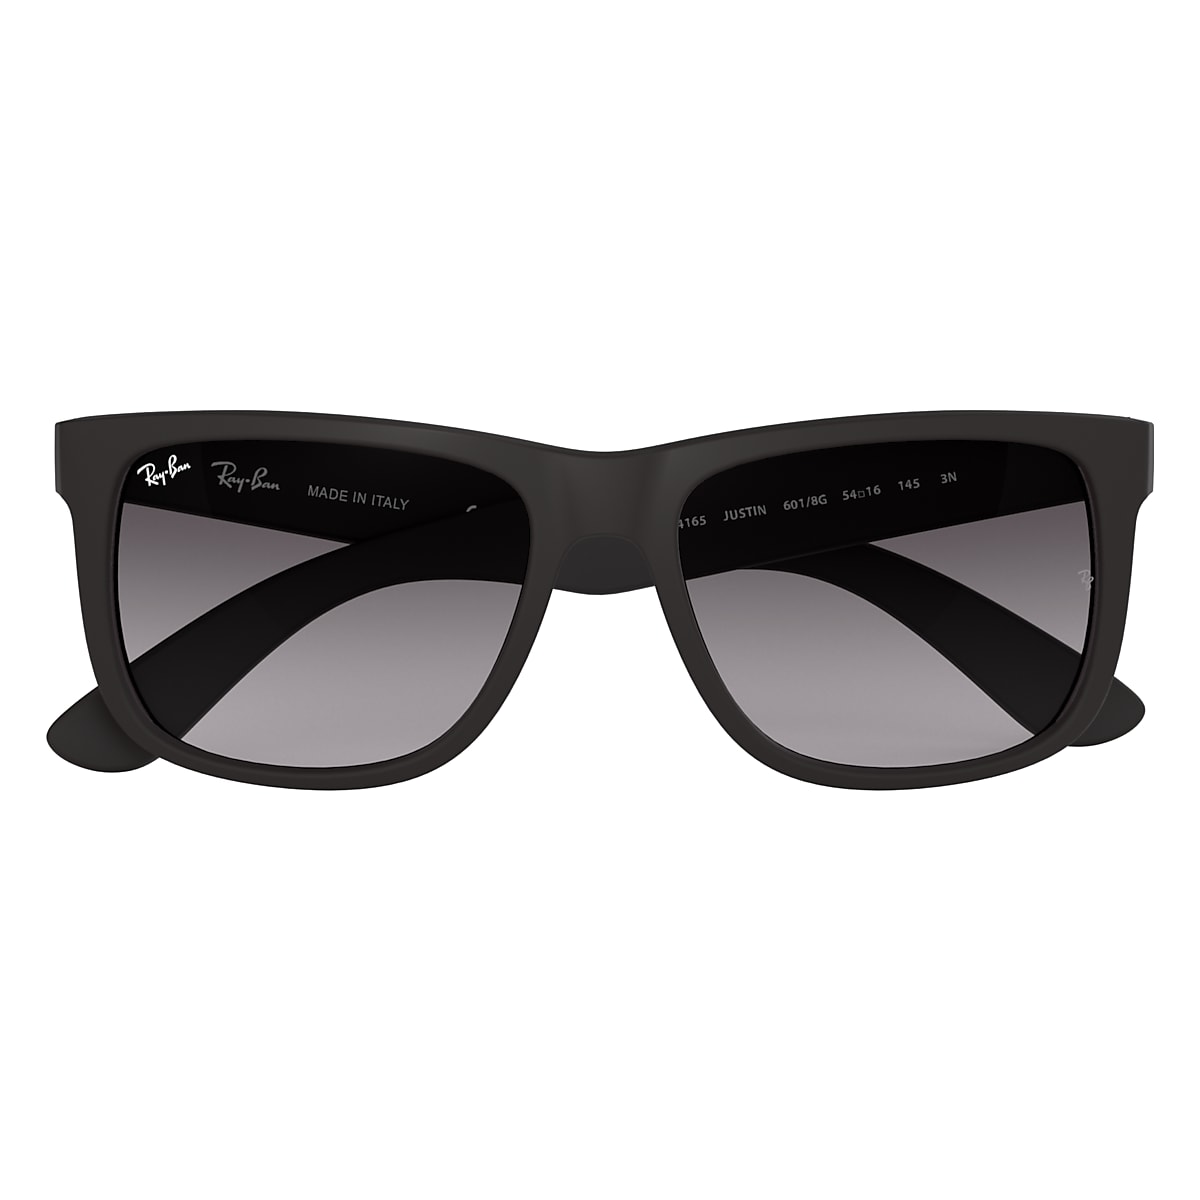 Middelen Geef energie Gehakt Justin Classic Sunglasses in Black and Dark Grey | Ray-Ban®